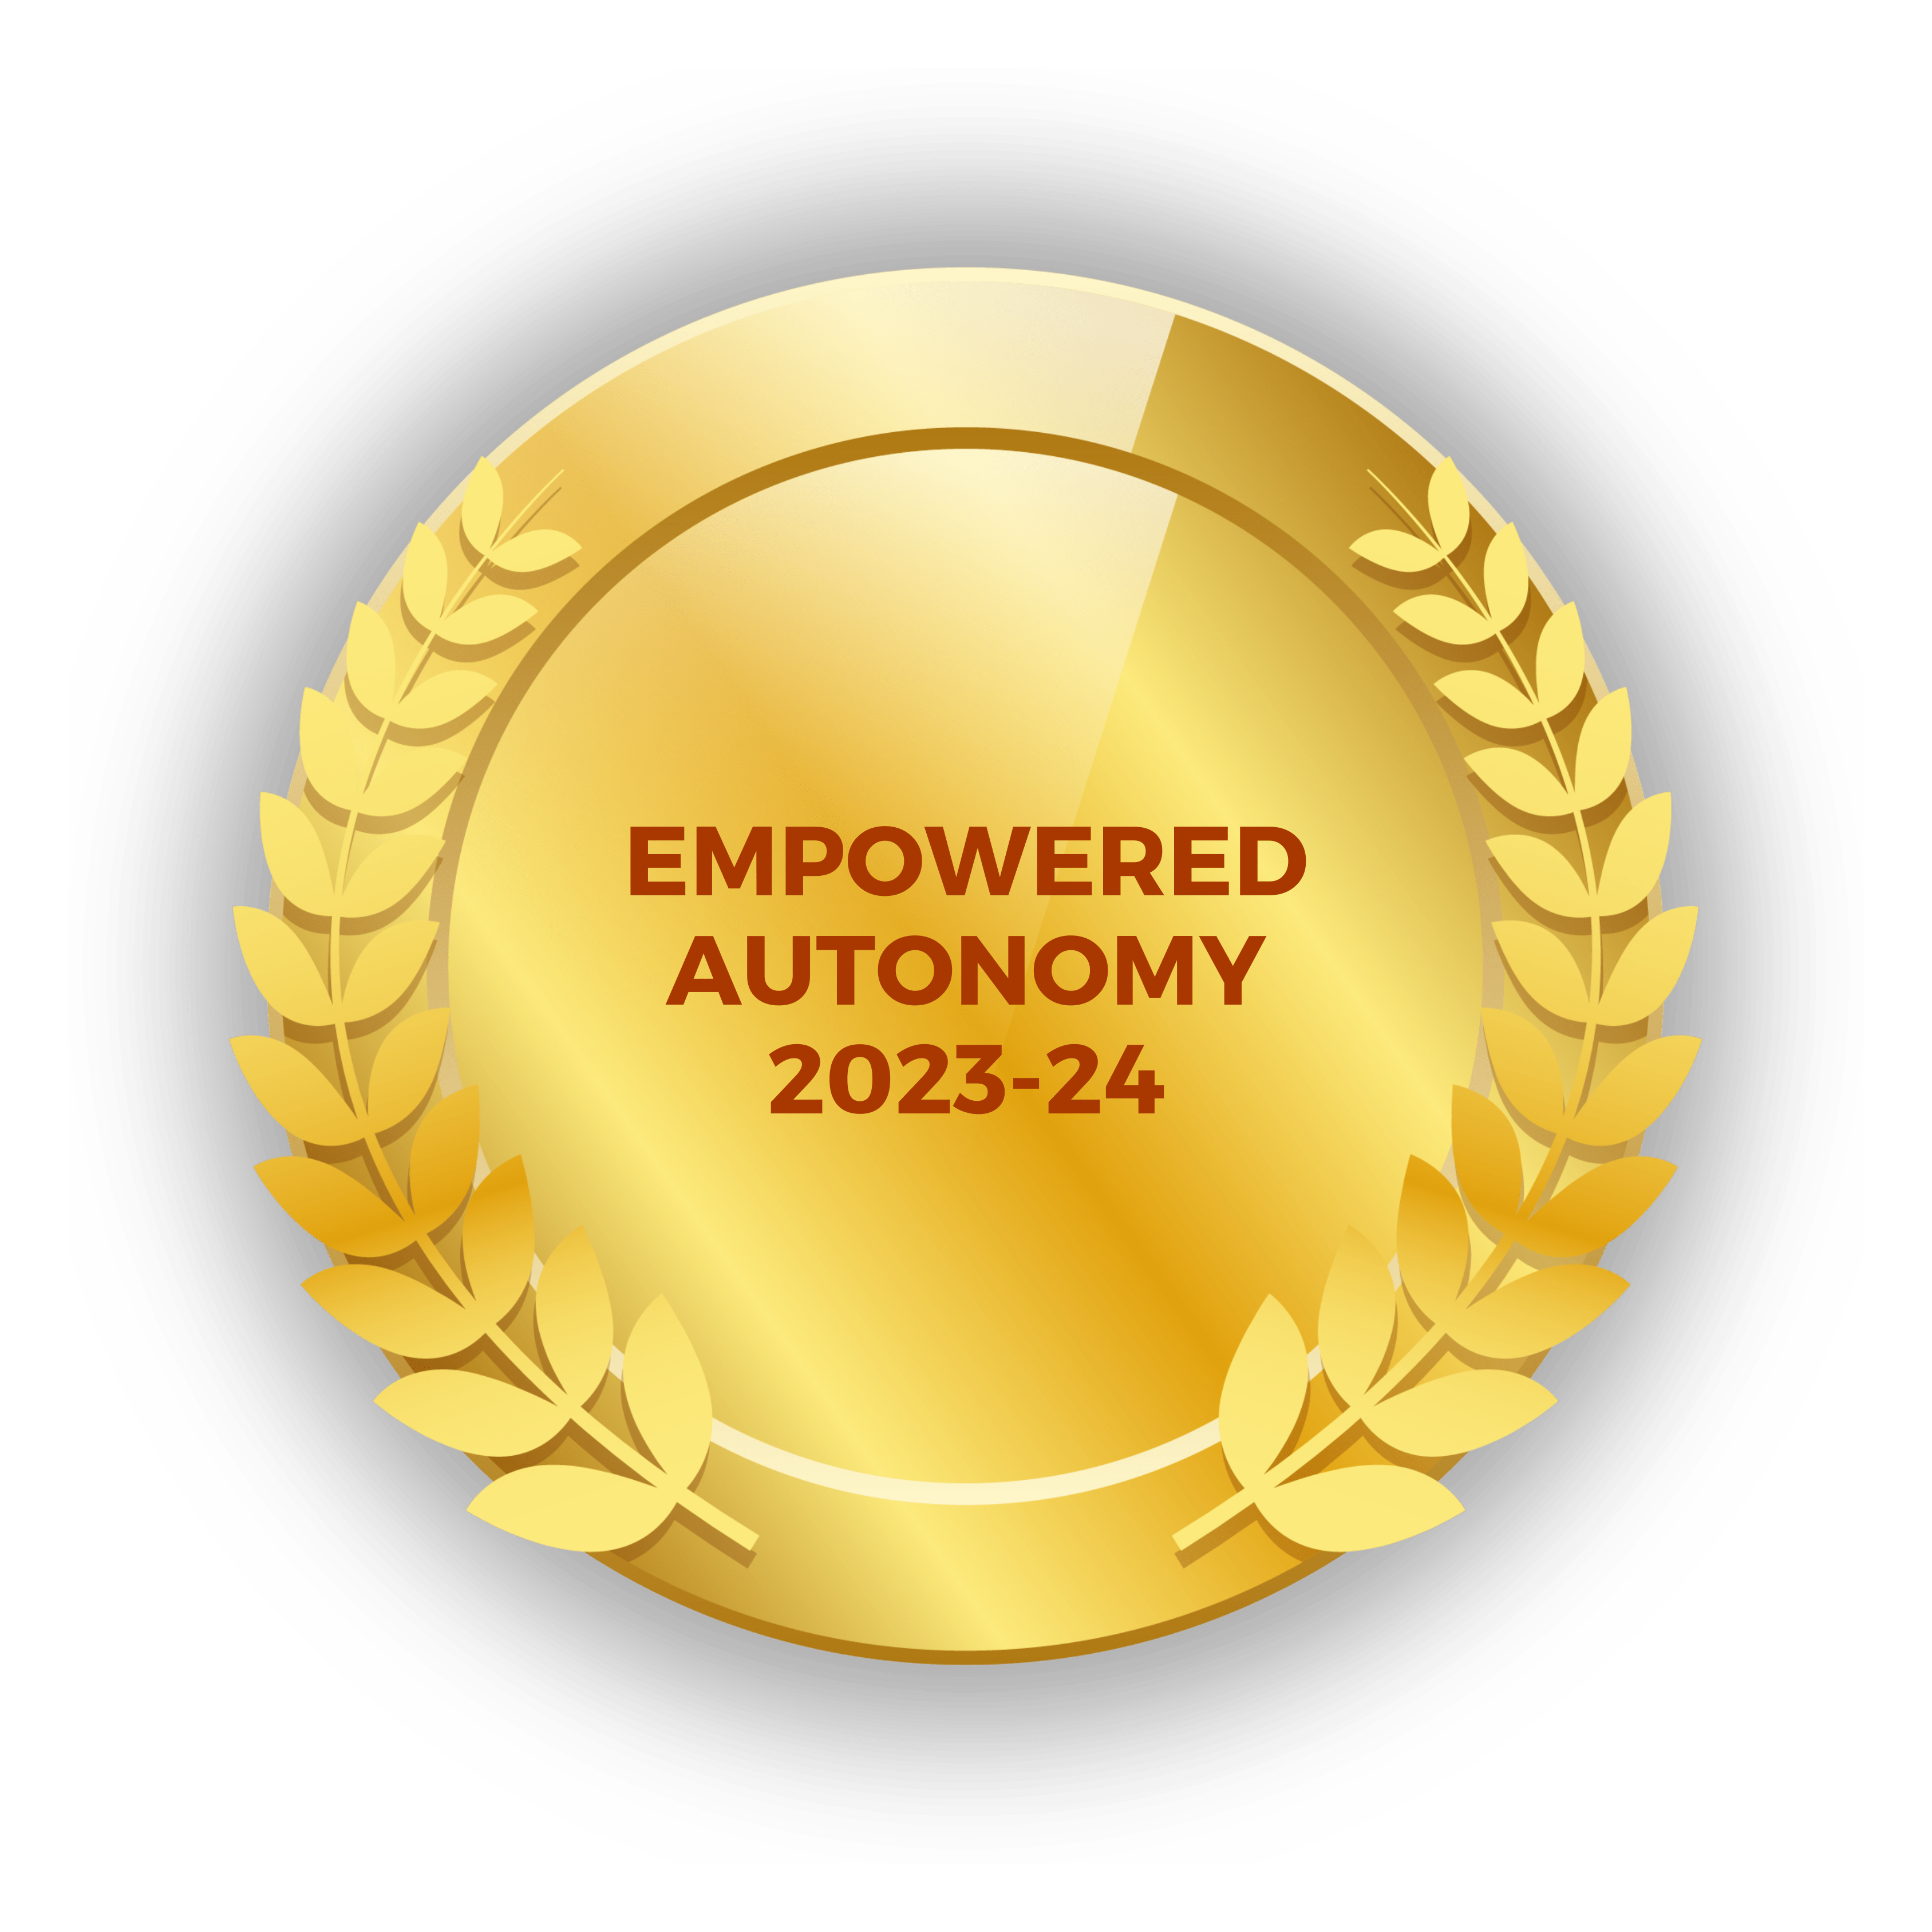 Empowered Autonomy (2023-24)